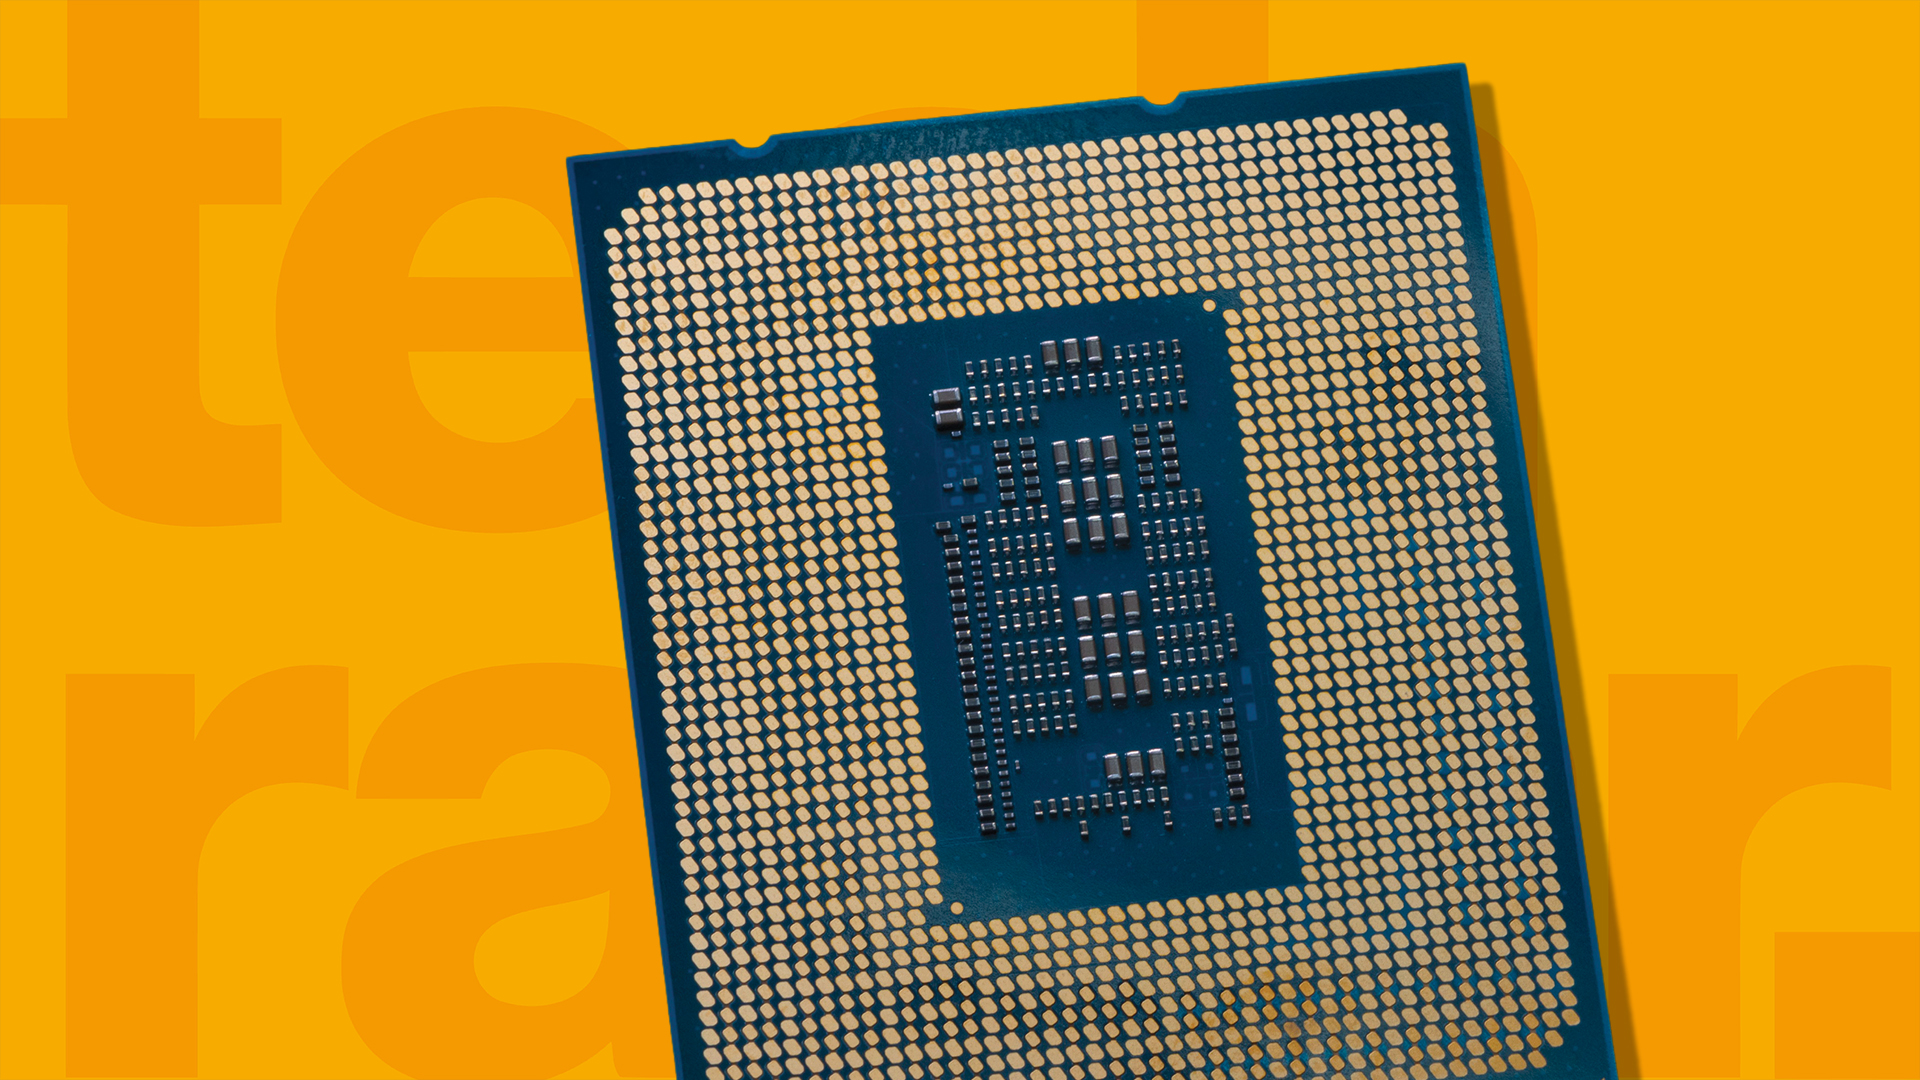 Kan ikke udstrømning Derfor The best processors for 2023: top CPUs from AMD and Intel | TechRadar